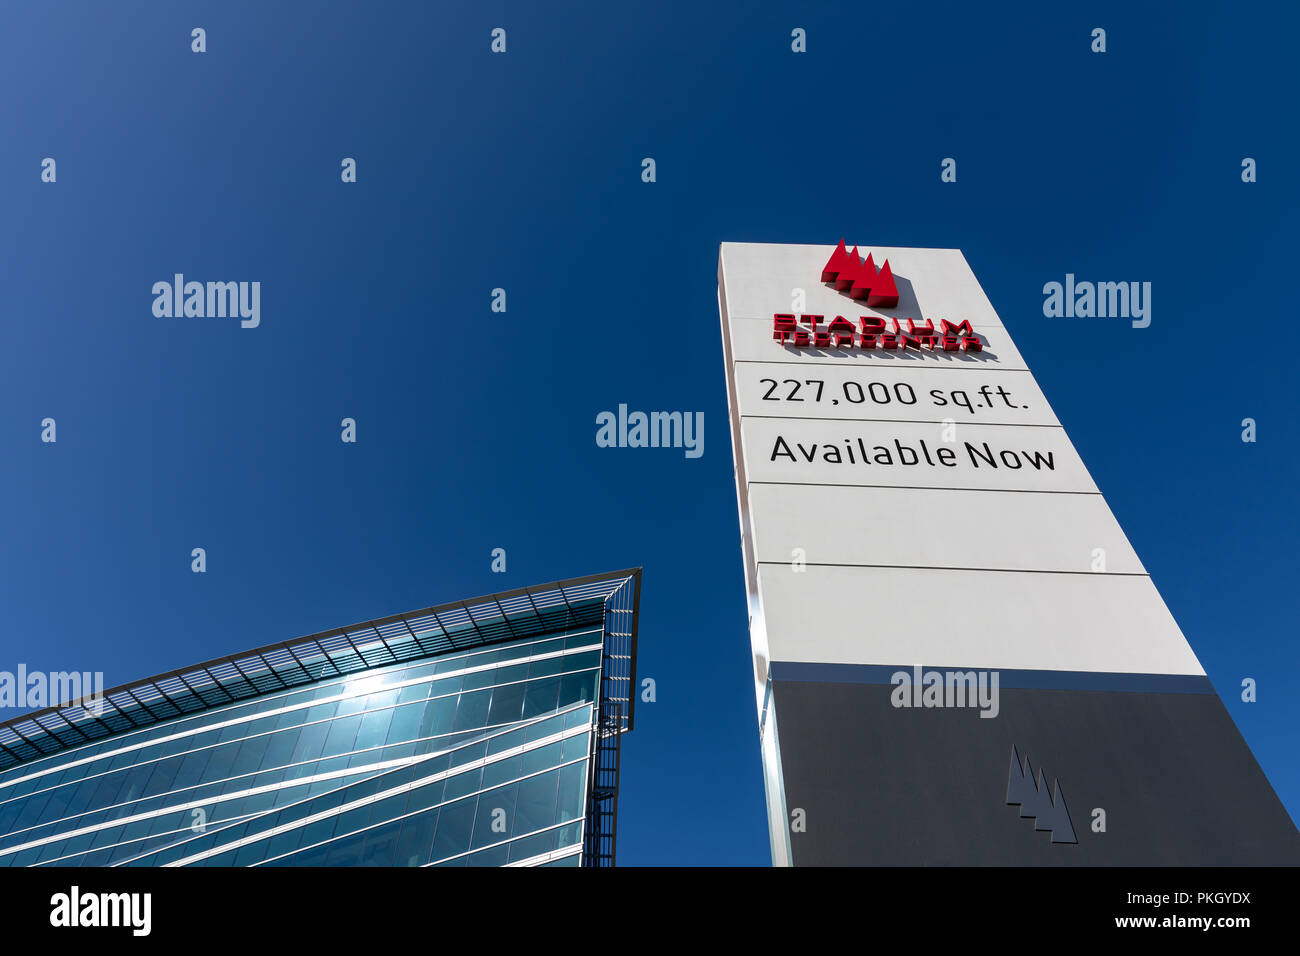 Stadium Techcenter – 227,000 sq.ft. available now, sign outside building; Santa Clara, California, USA Stock Photo